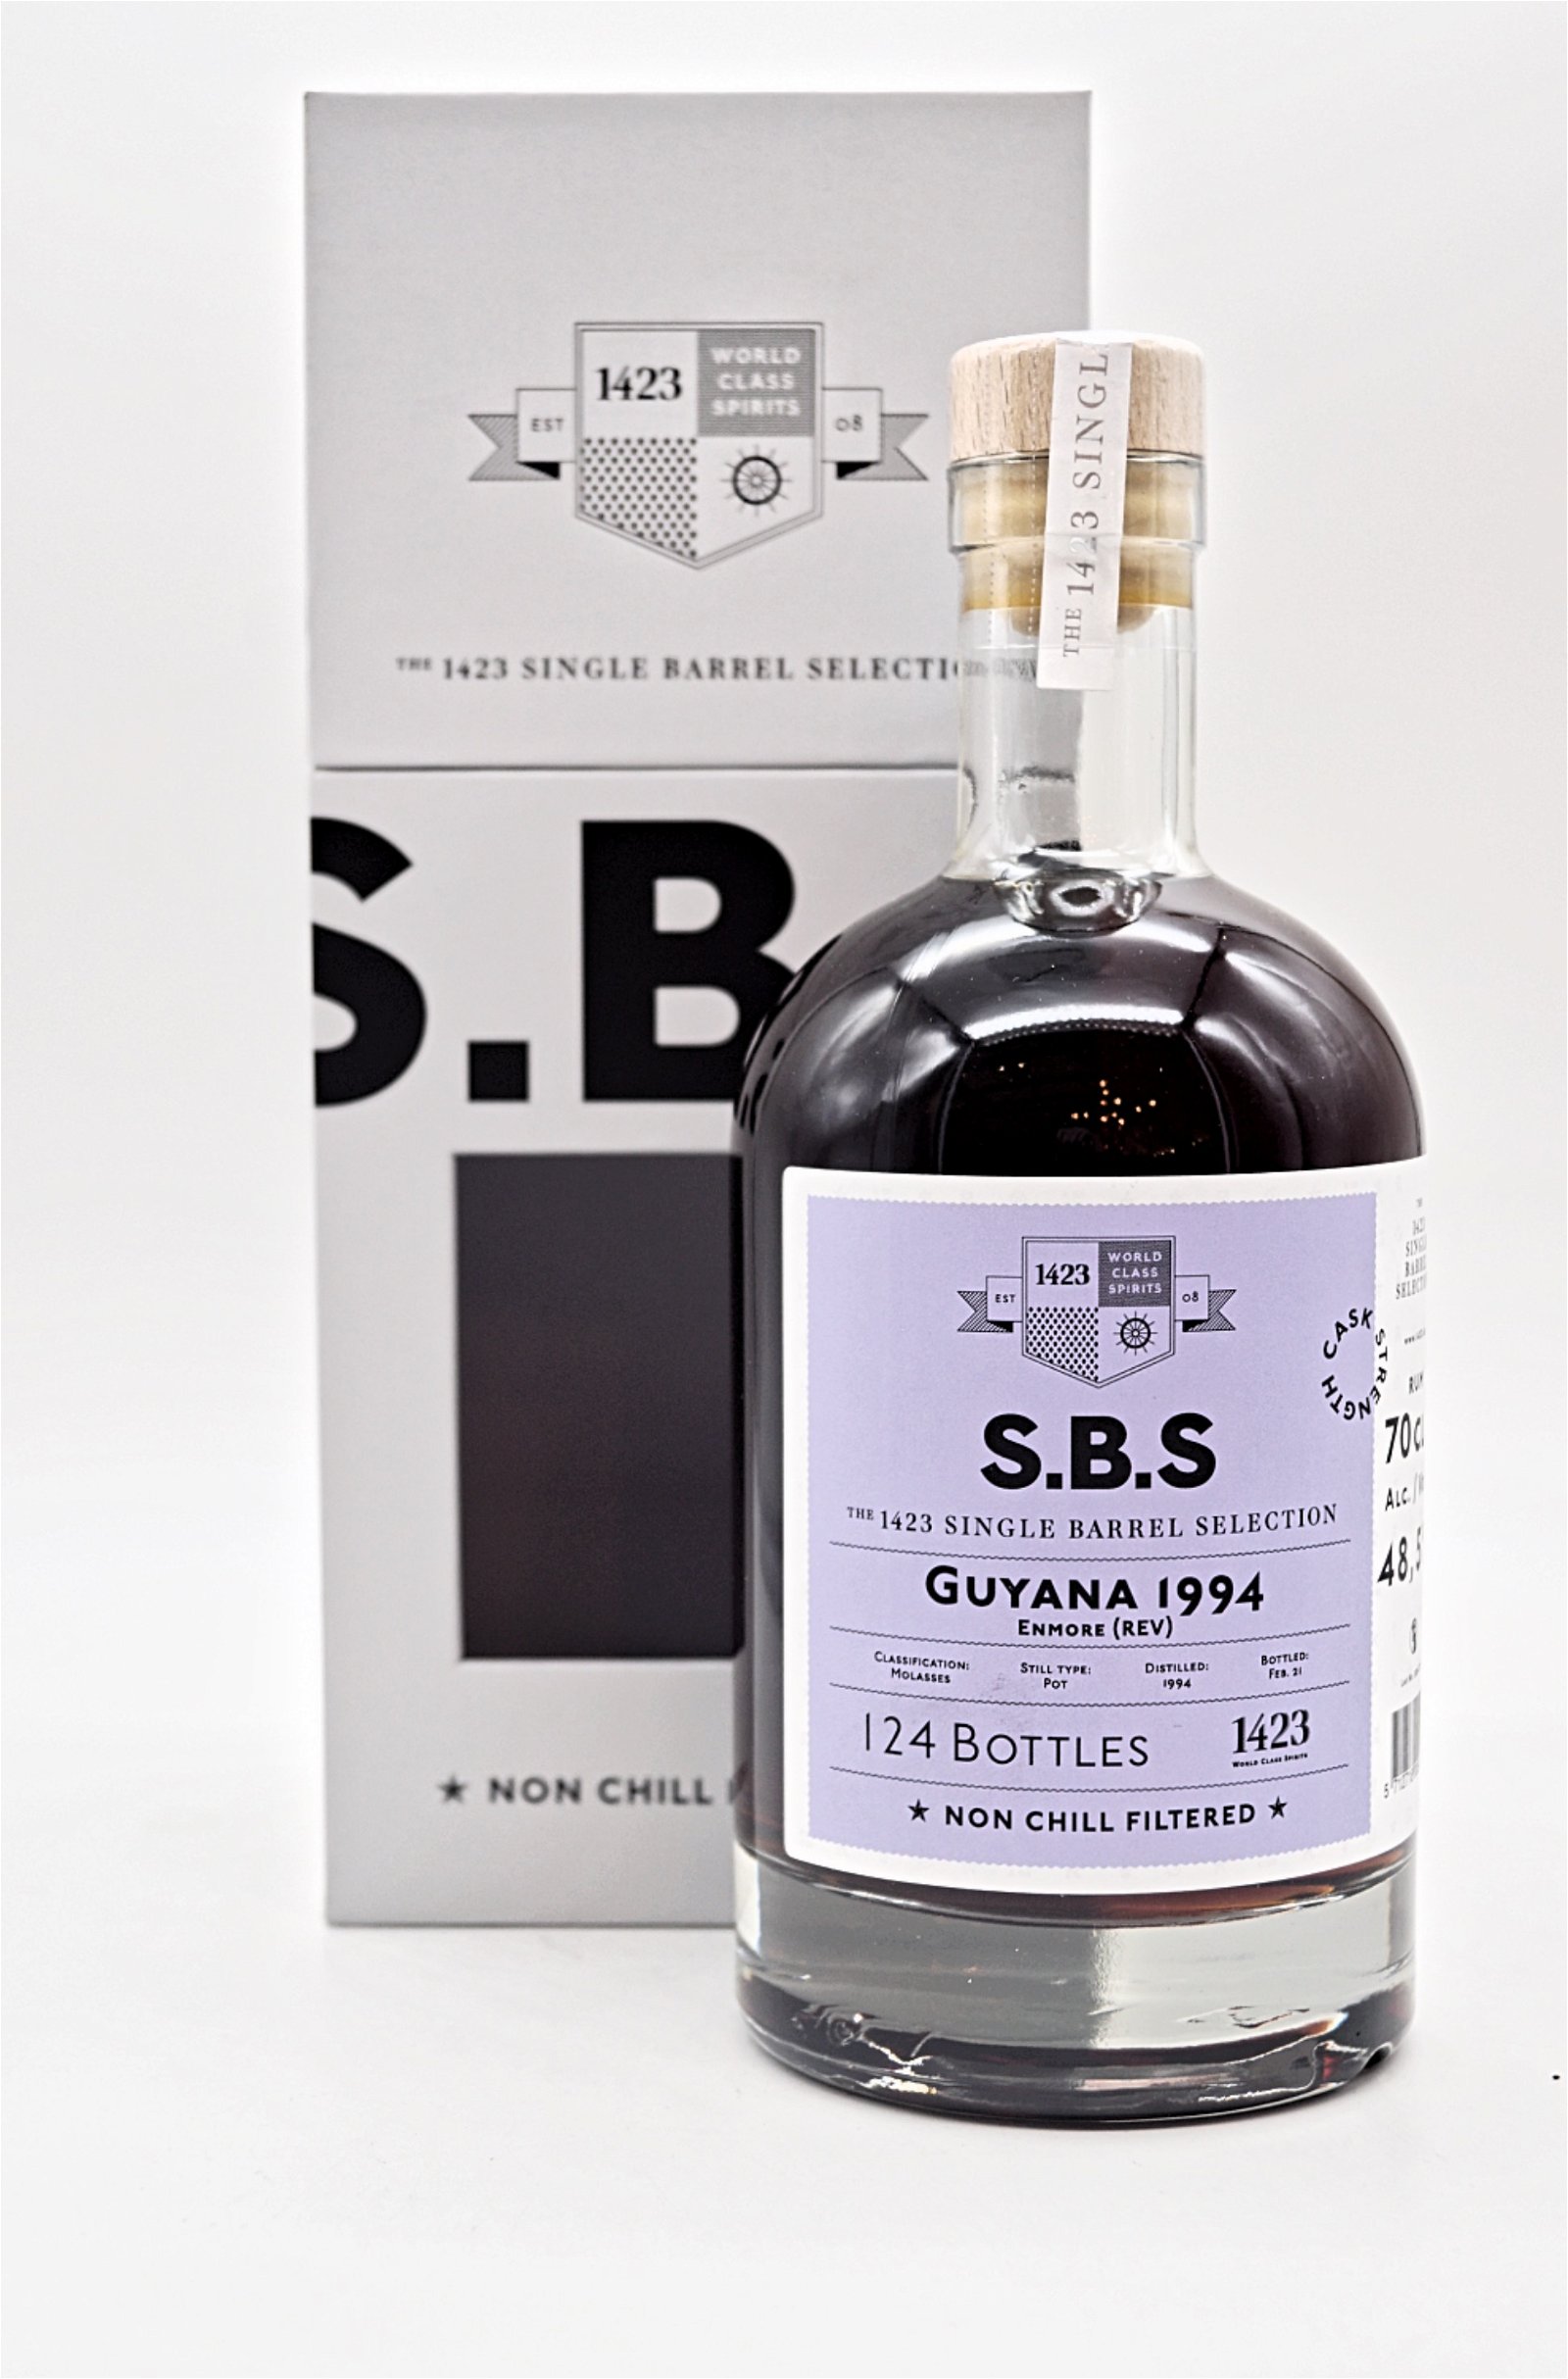 SBS Guyana 1994 Enmore Single Barrel Selection Rum